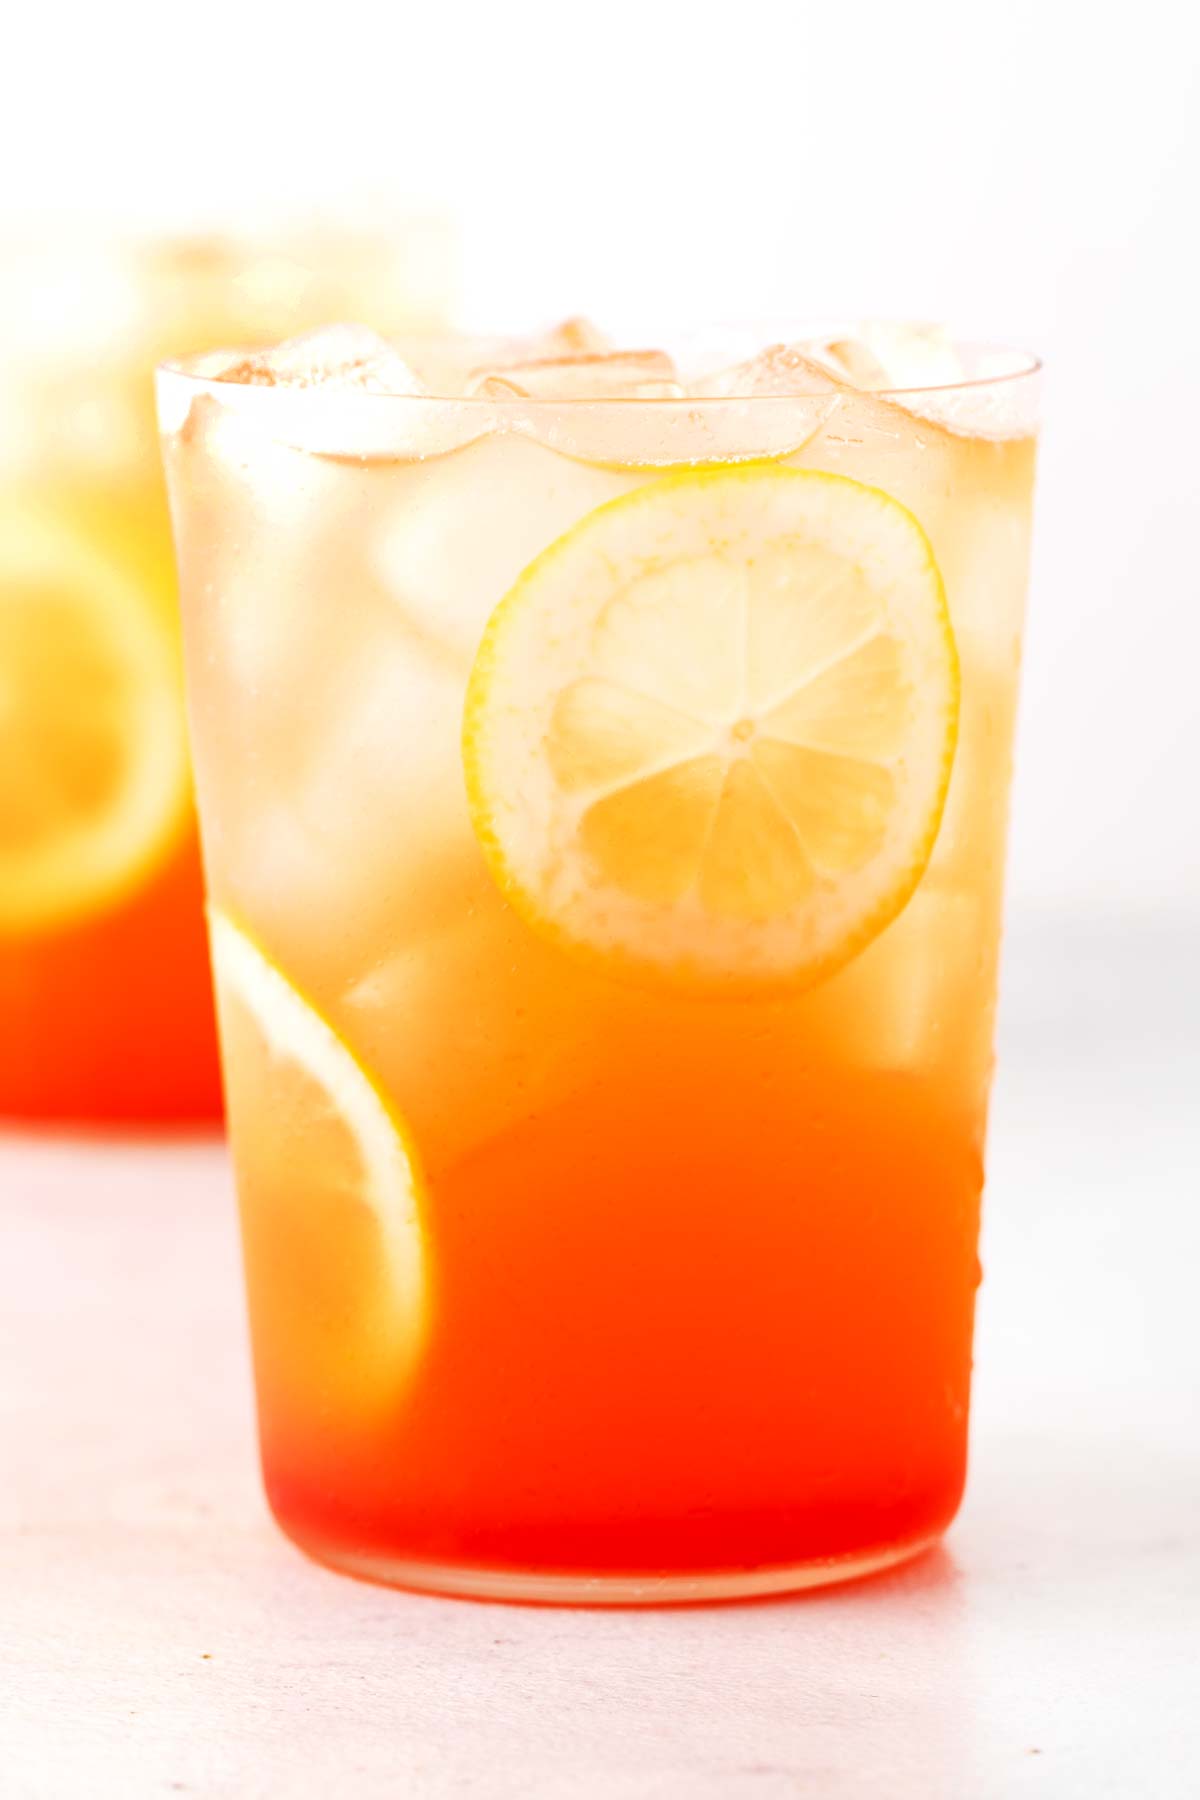 Strawberry Green Tea Lemonade in clear glass with sliced lemons.